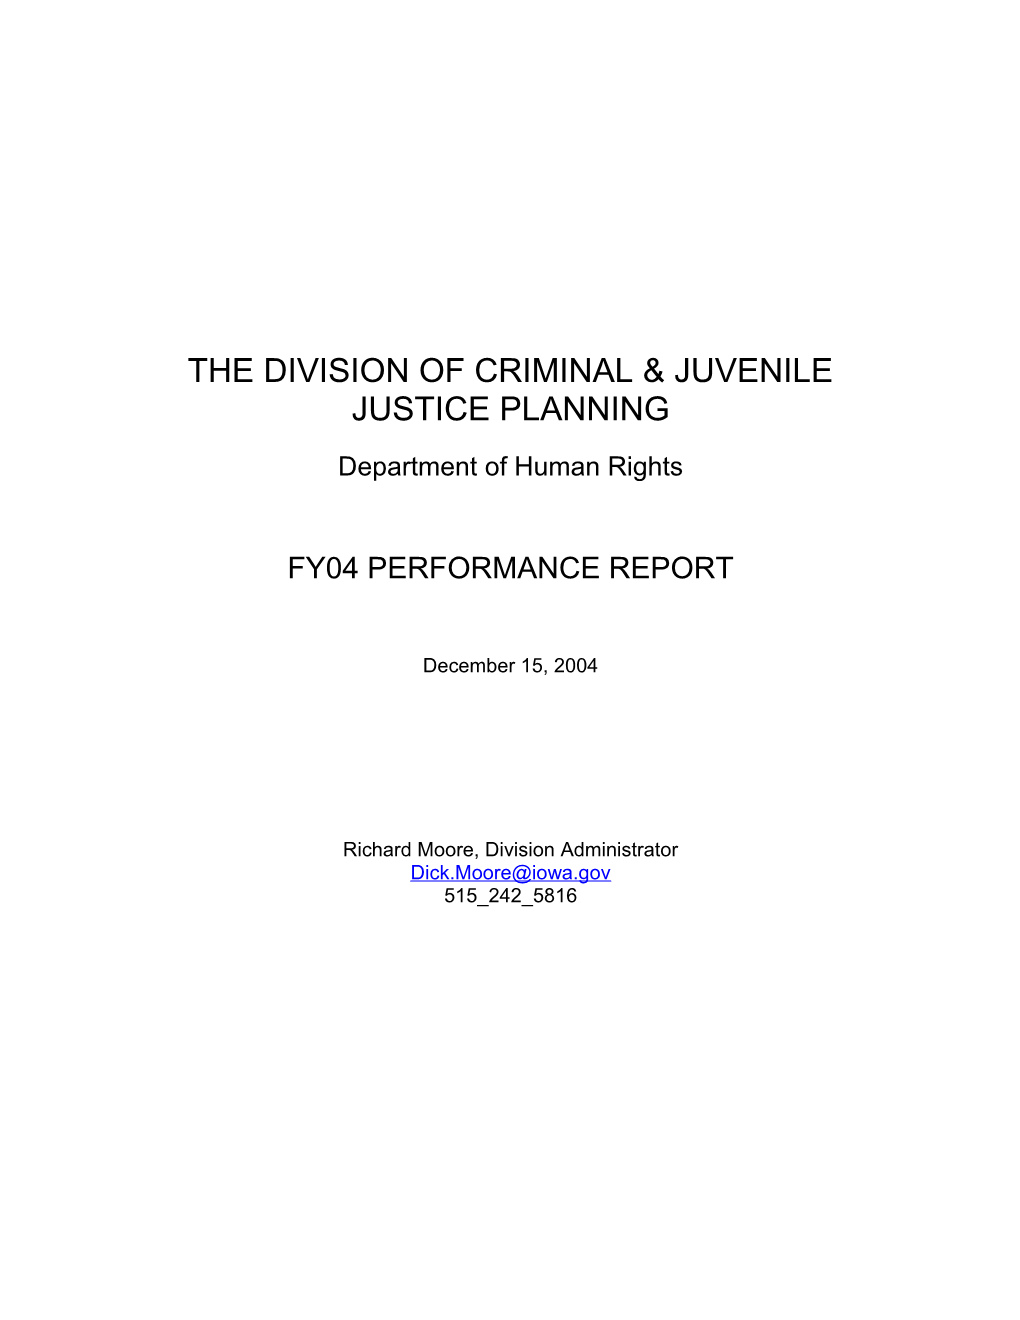 The Division of Criminal & Juvenile Justice Planning